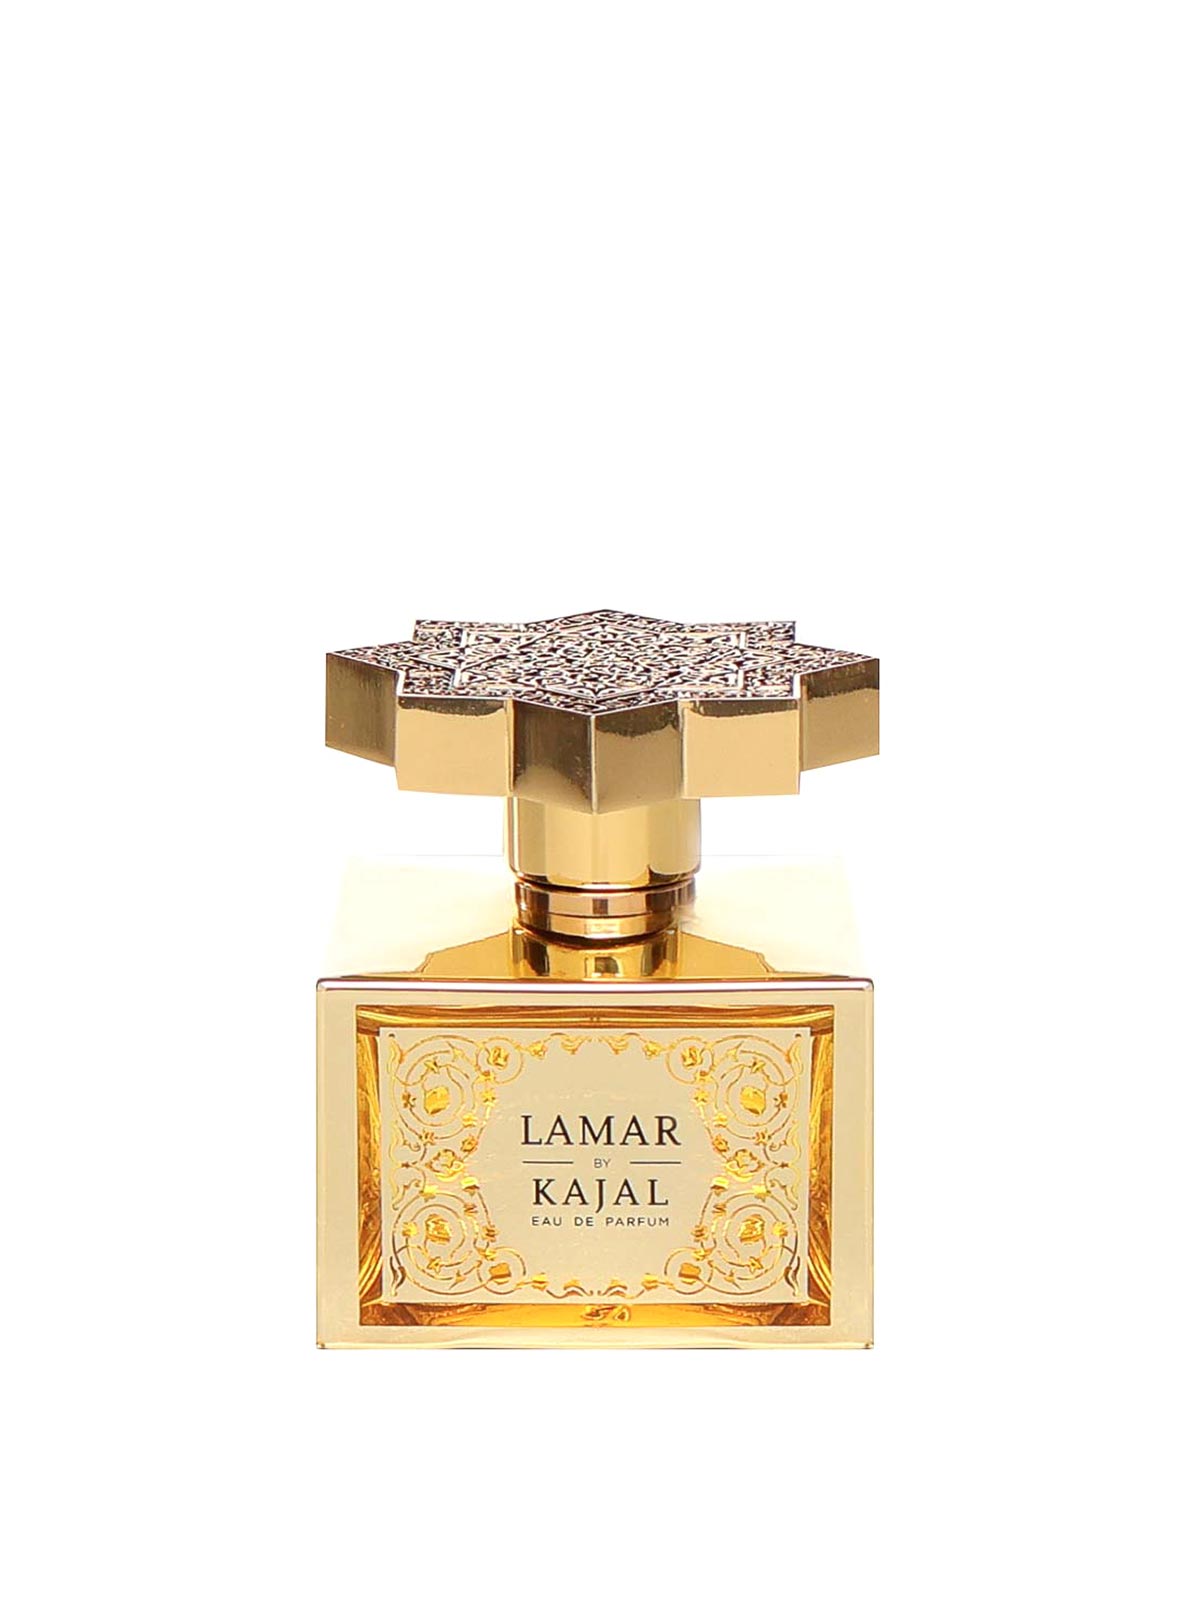 Beauty Kajal - Lamar eau de parfum 100ml - LAMAR1